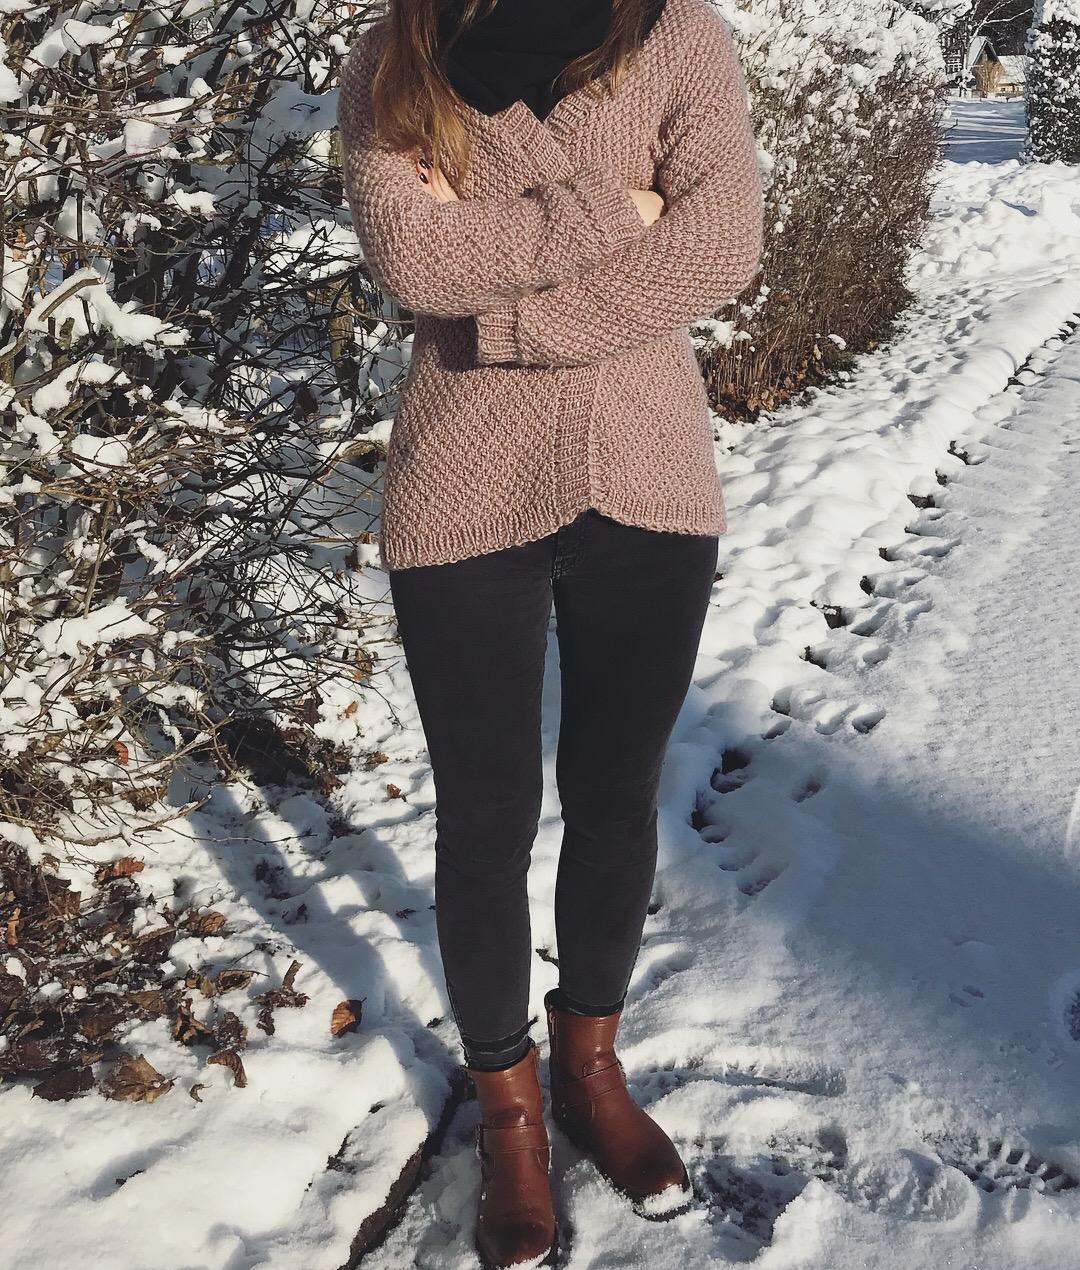 Strick & Schnee #ootd #weareknitters #snow #allgäu #cardigan #wool